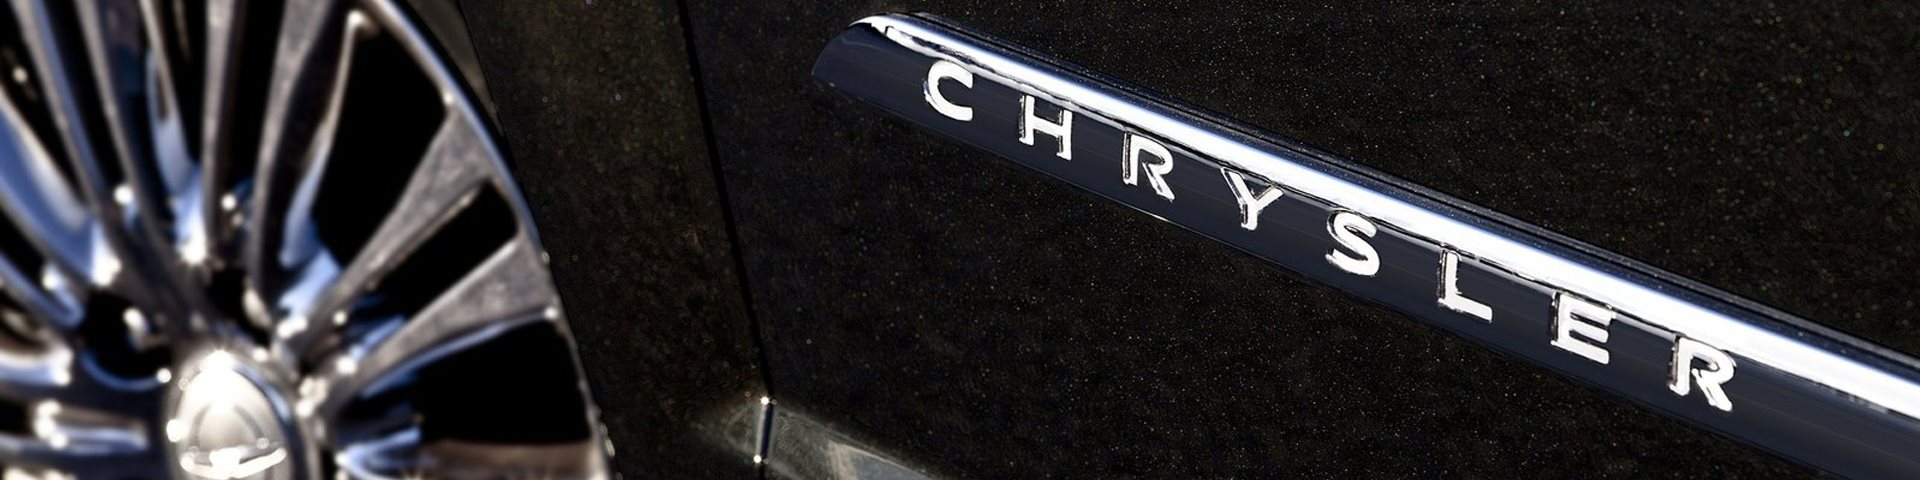 Lp Chrysler Pagina Marca